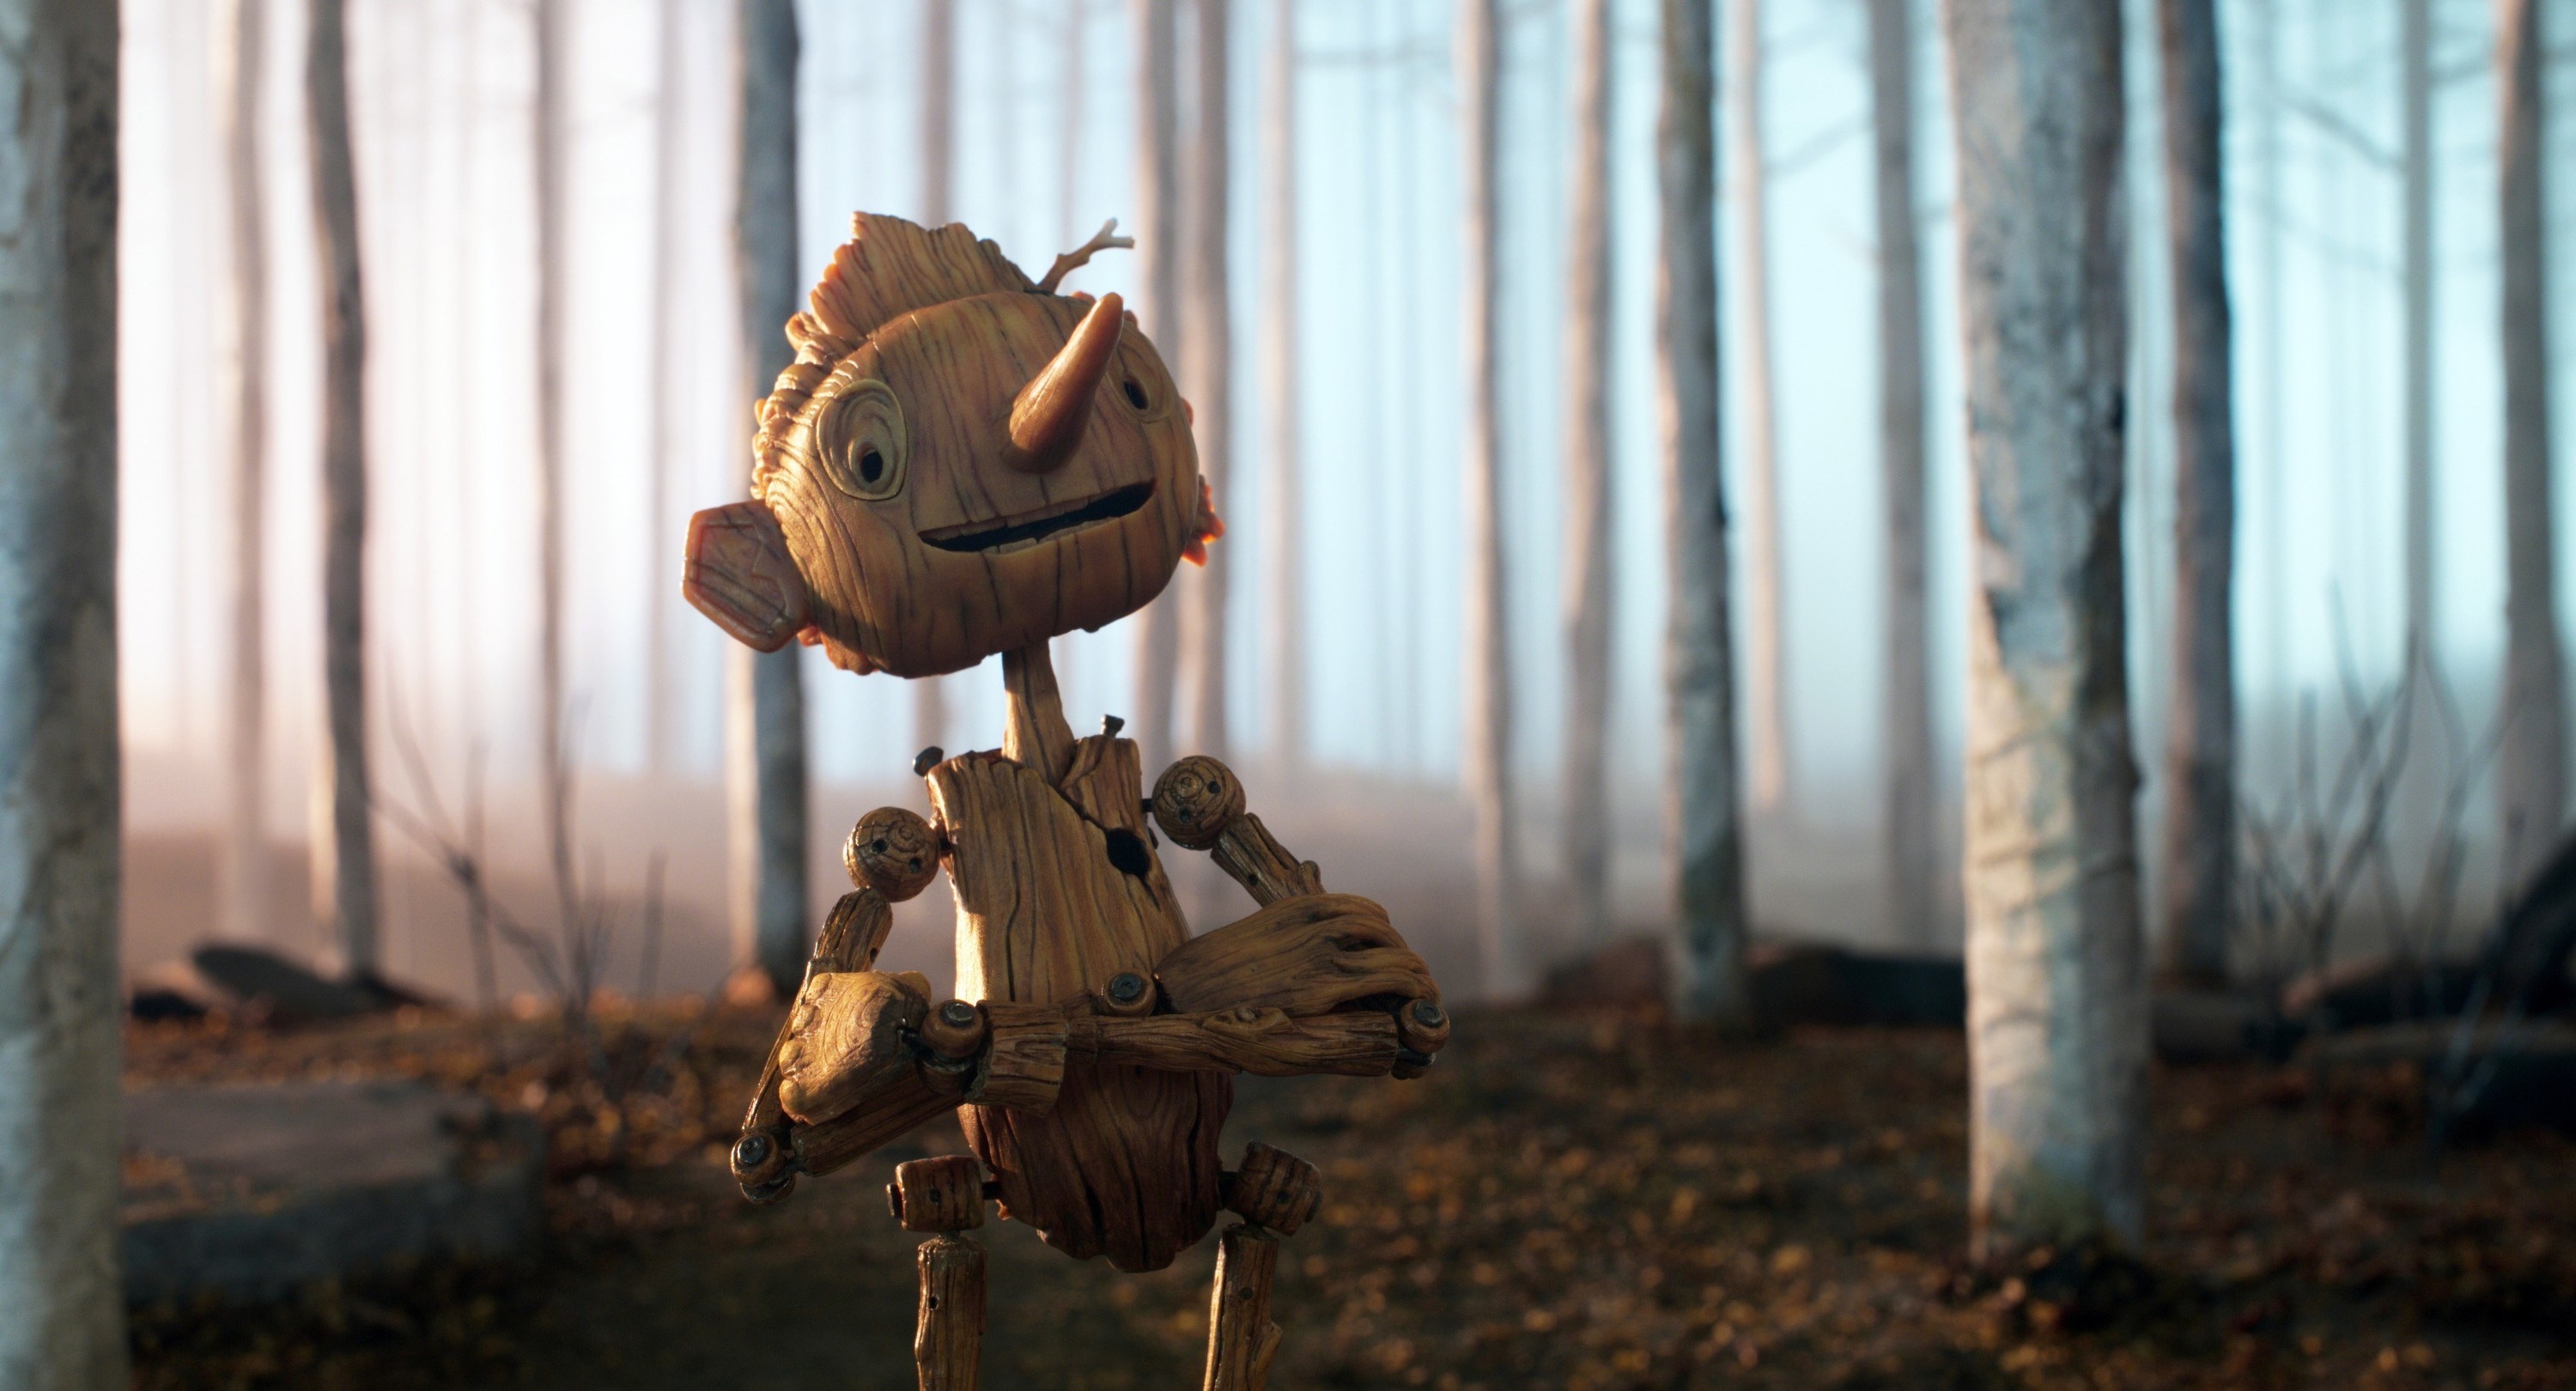 Wooden Pinocchio